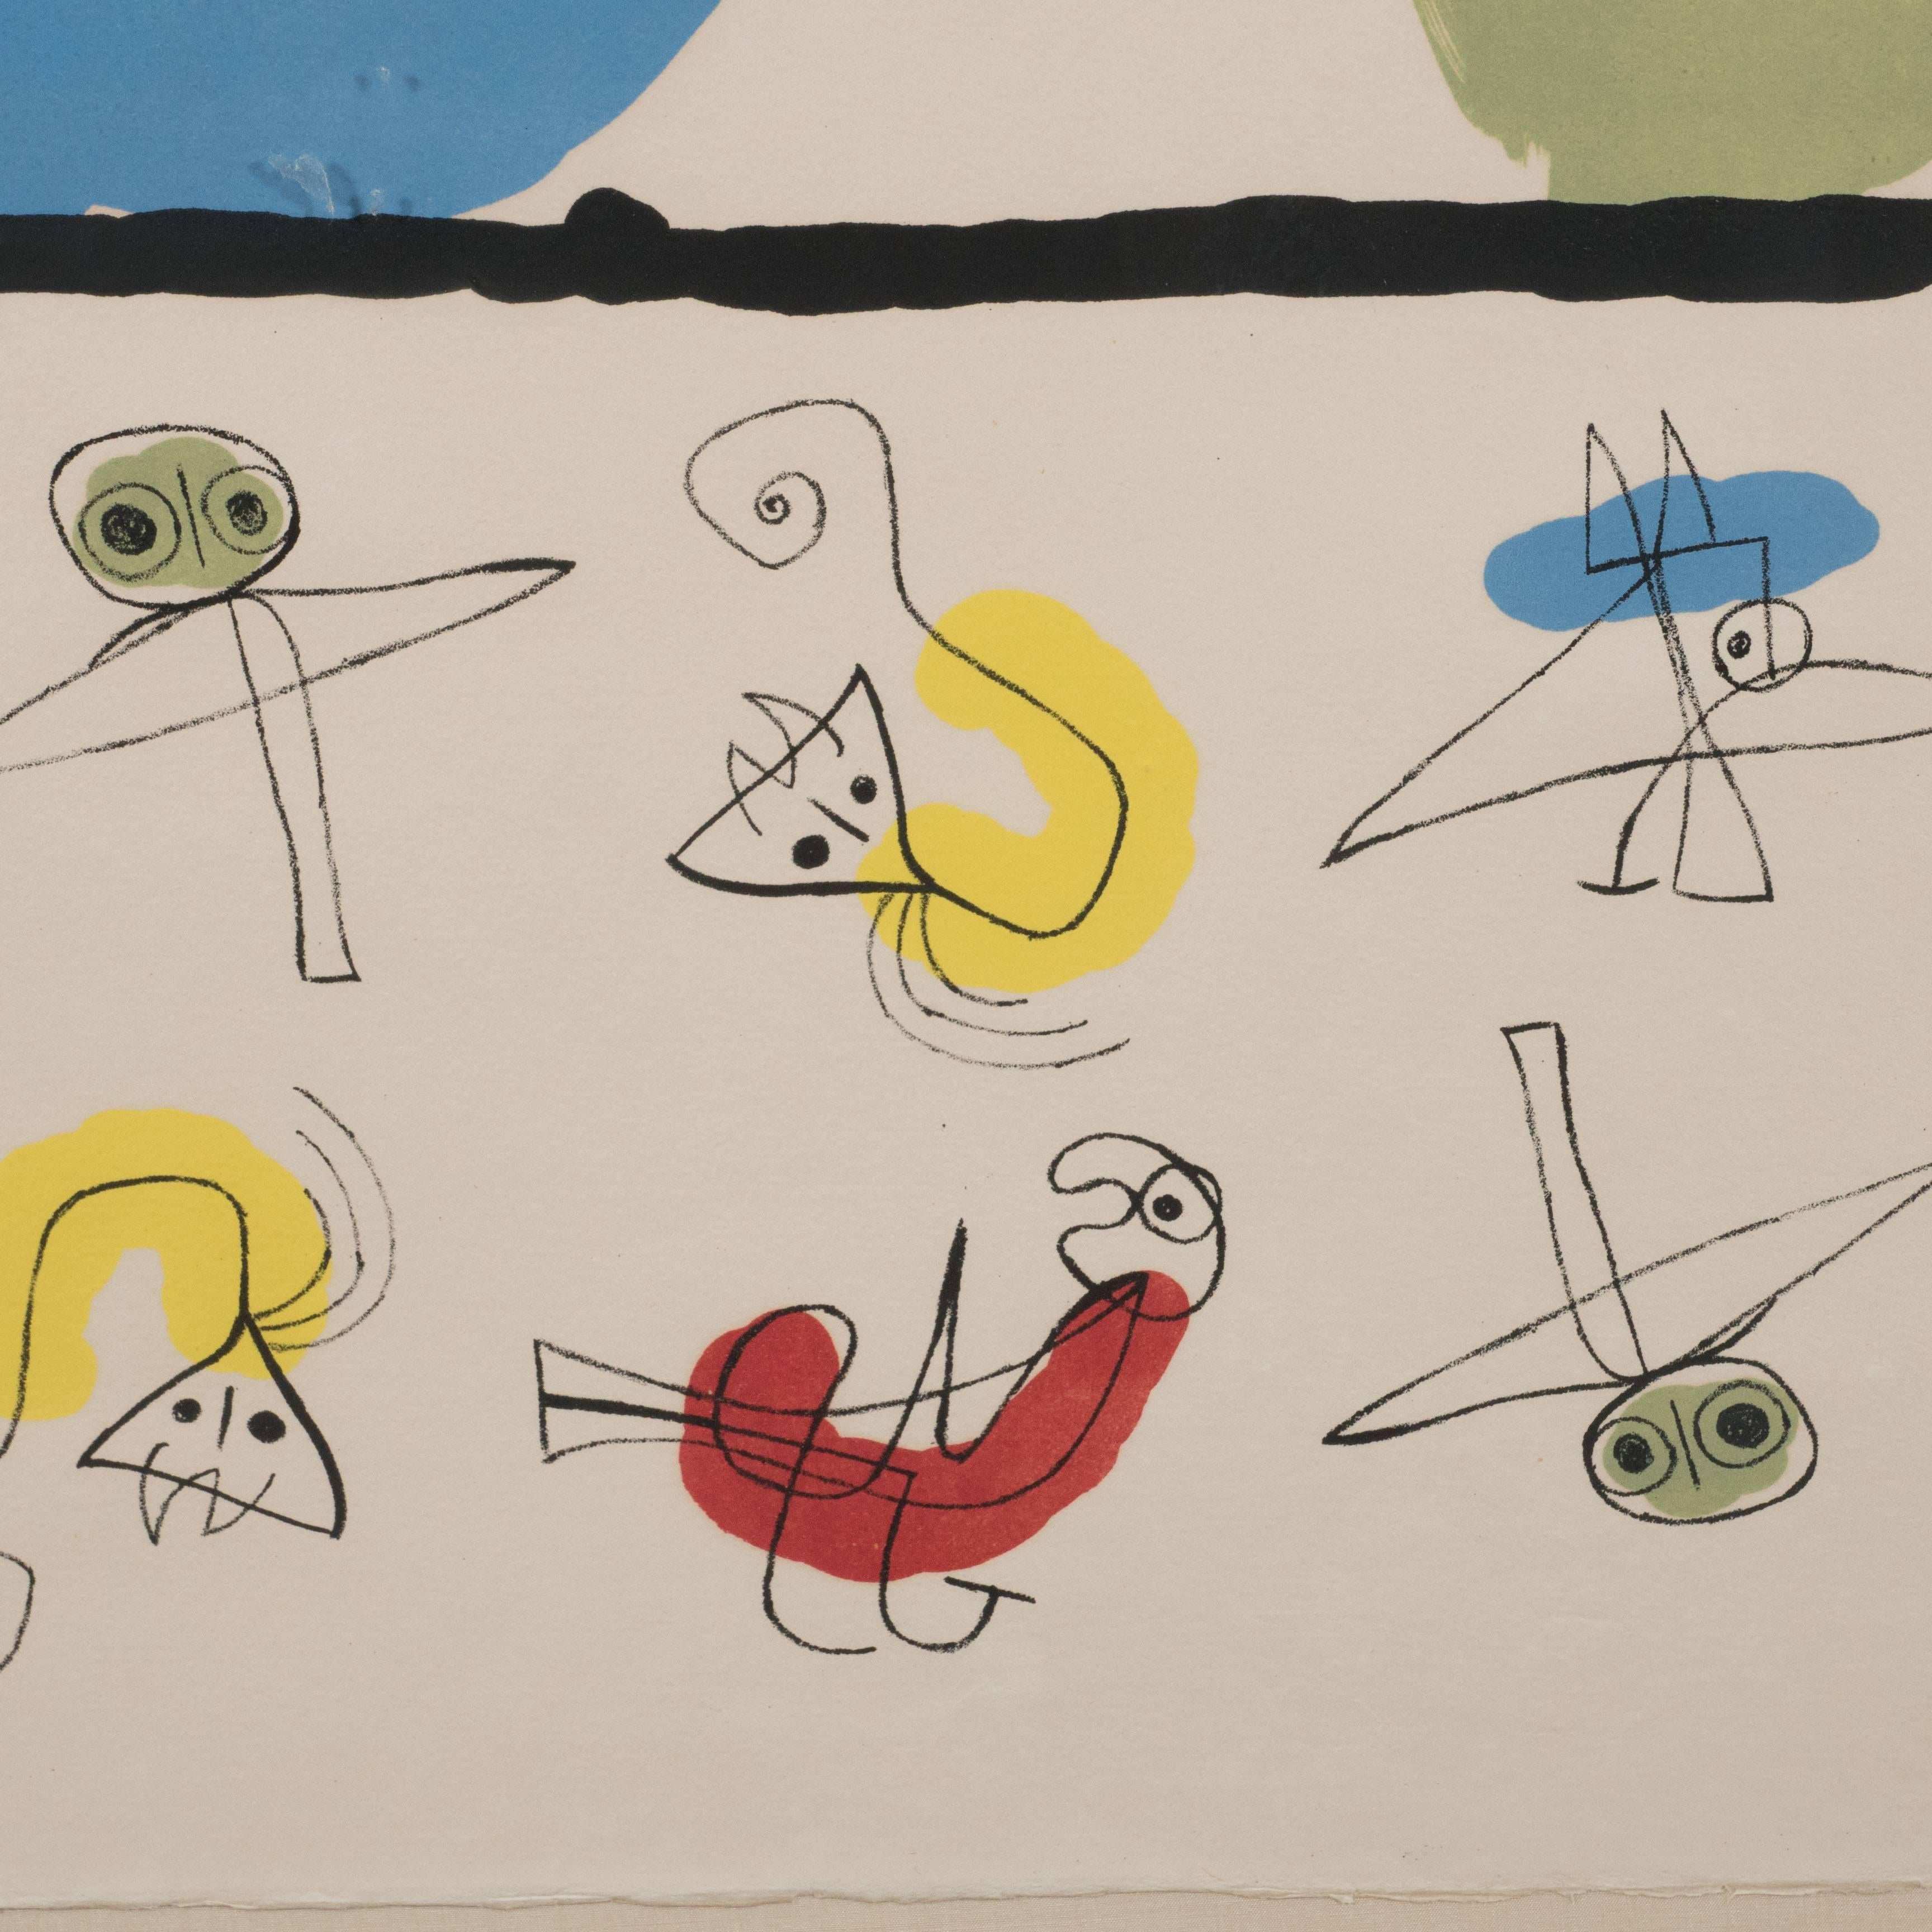 Joan Miro 